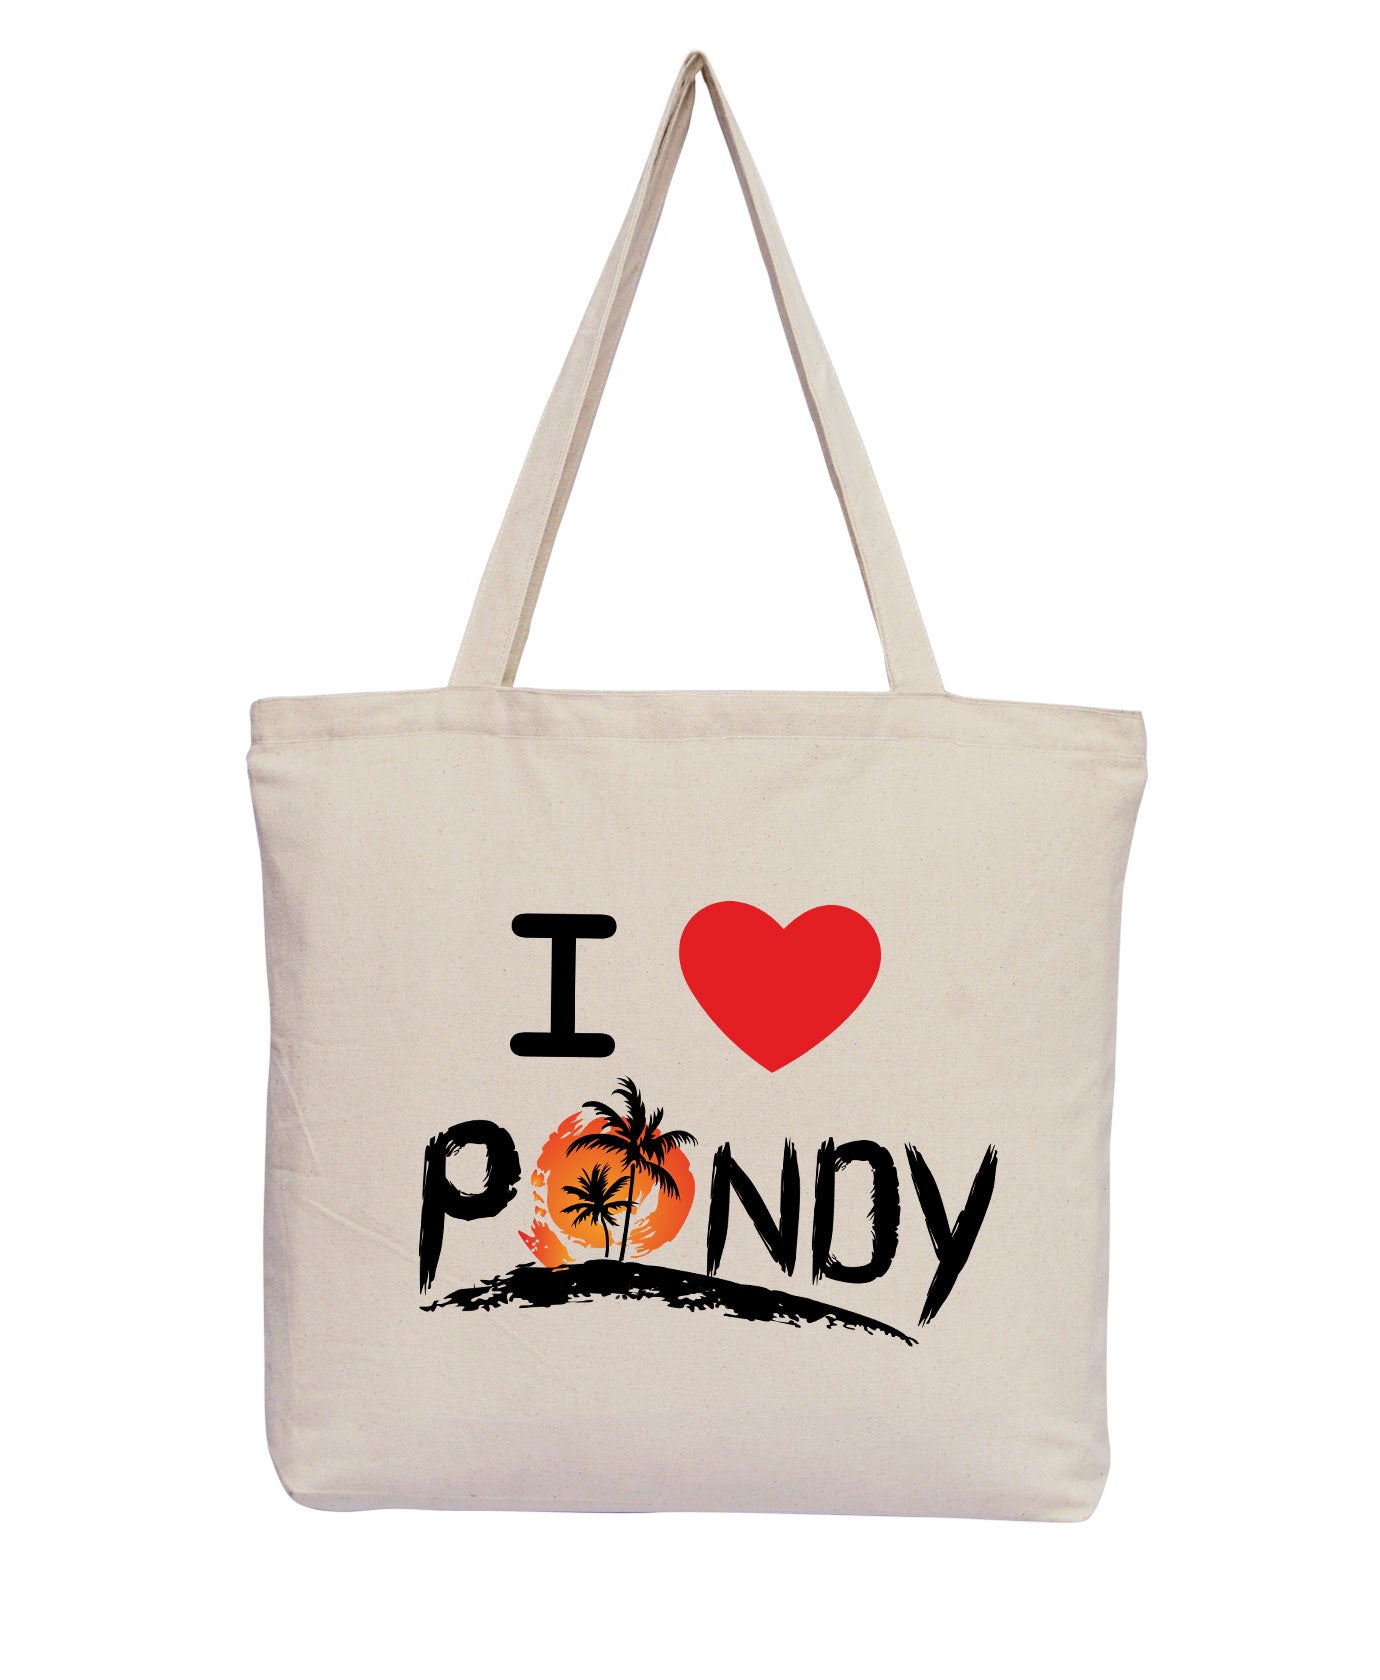 I Love Pondy - Natural Tote Bag